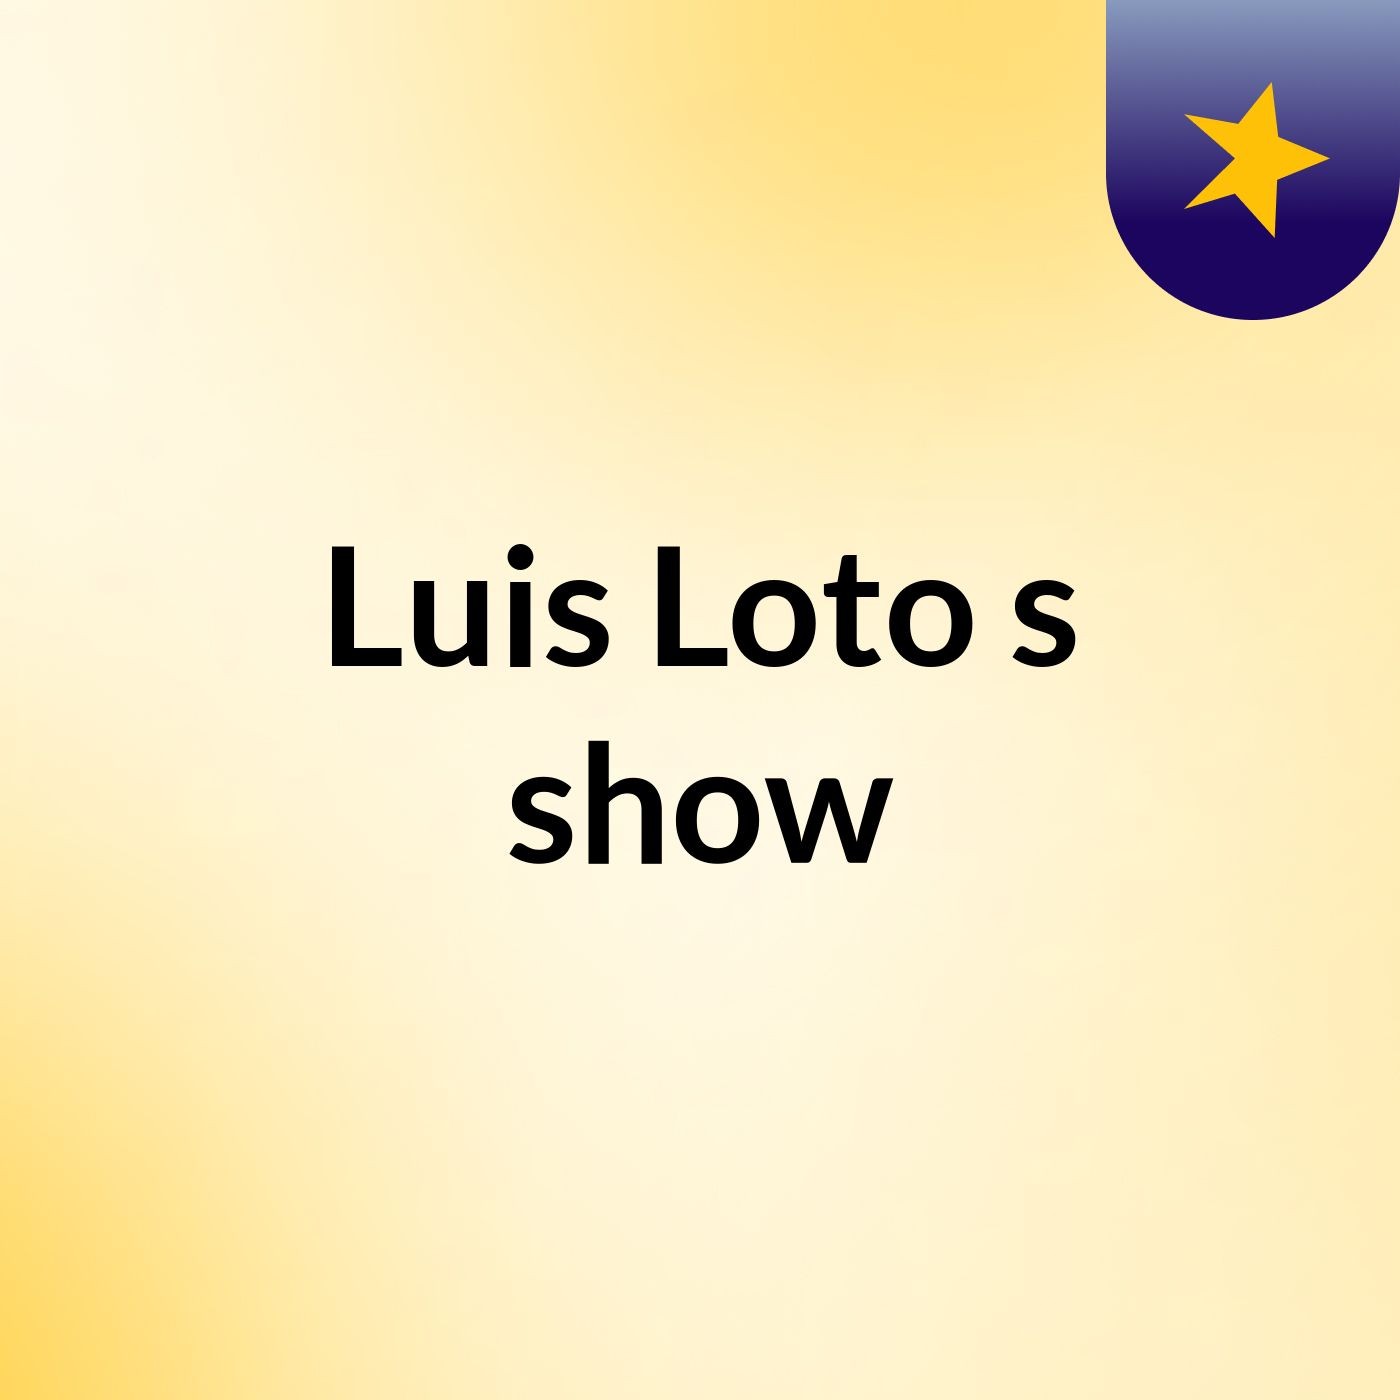 Luis Loto's show